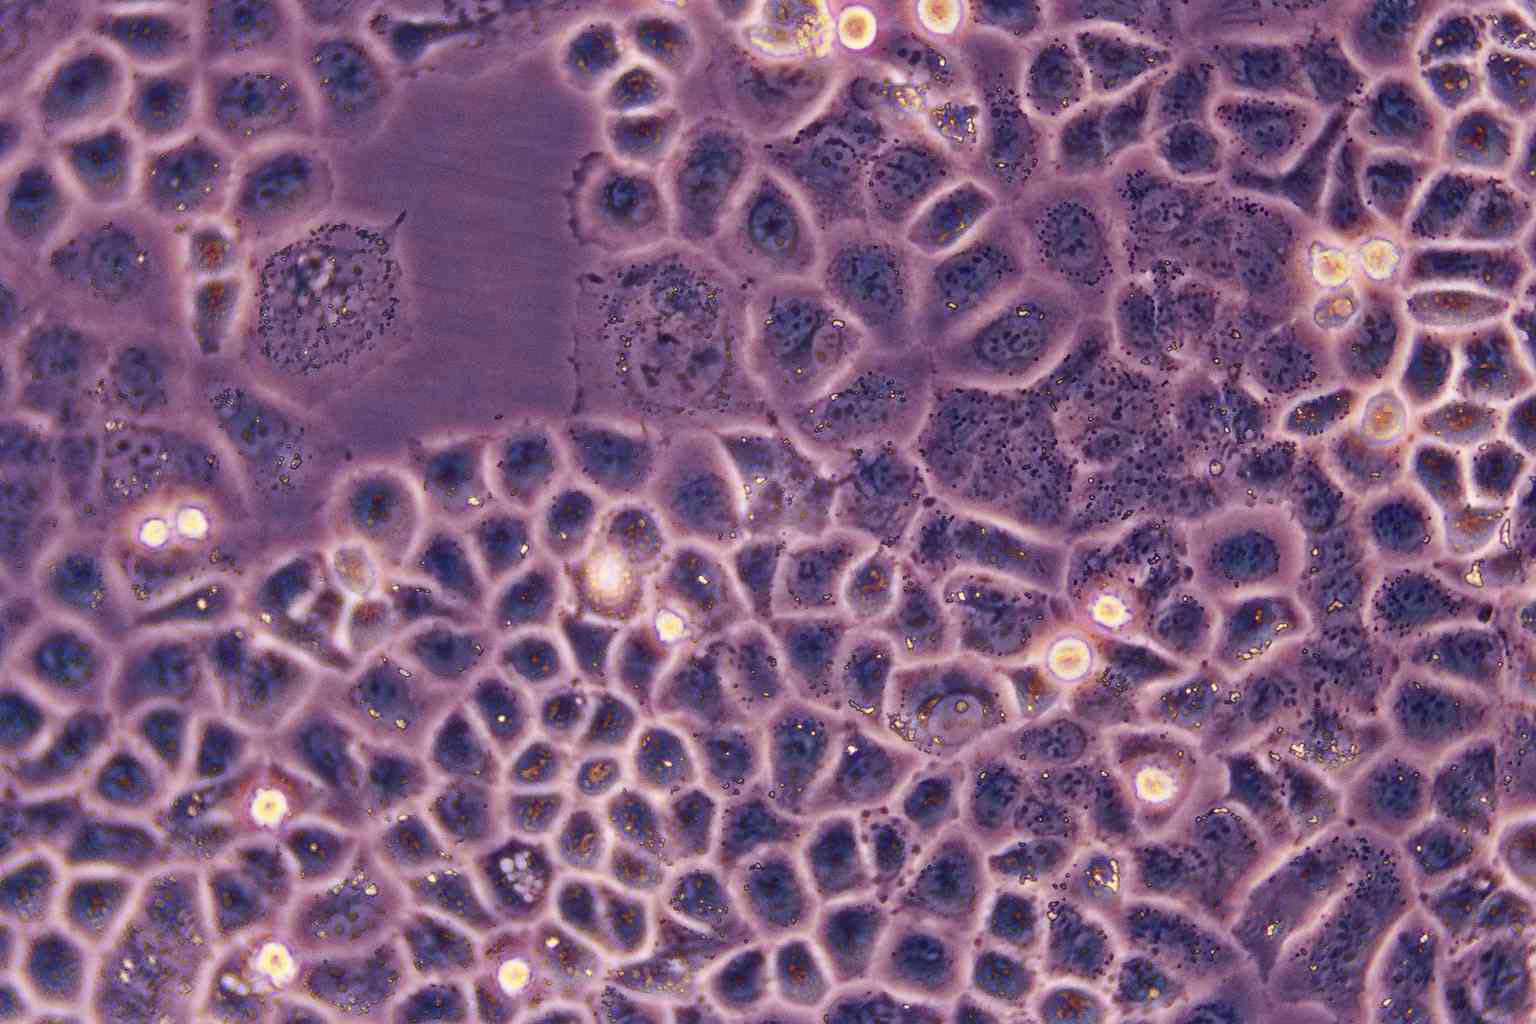 Rca-B epithelioid cells大鼠鳞癌细胞系,Rca-B epithelioid cells